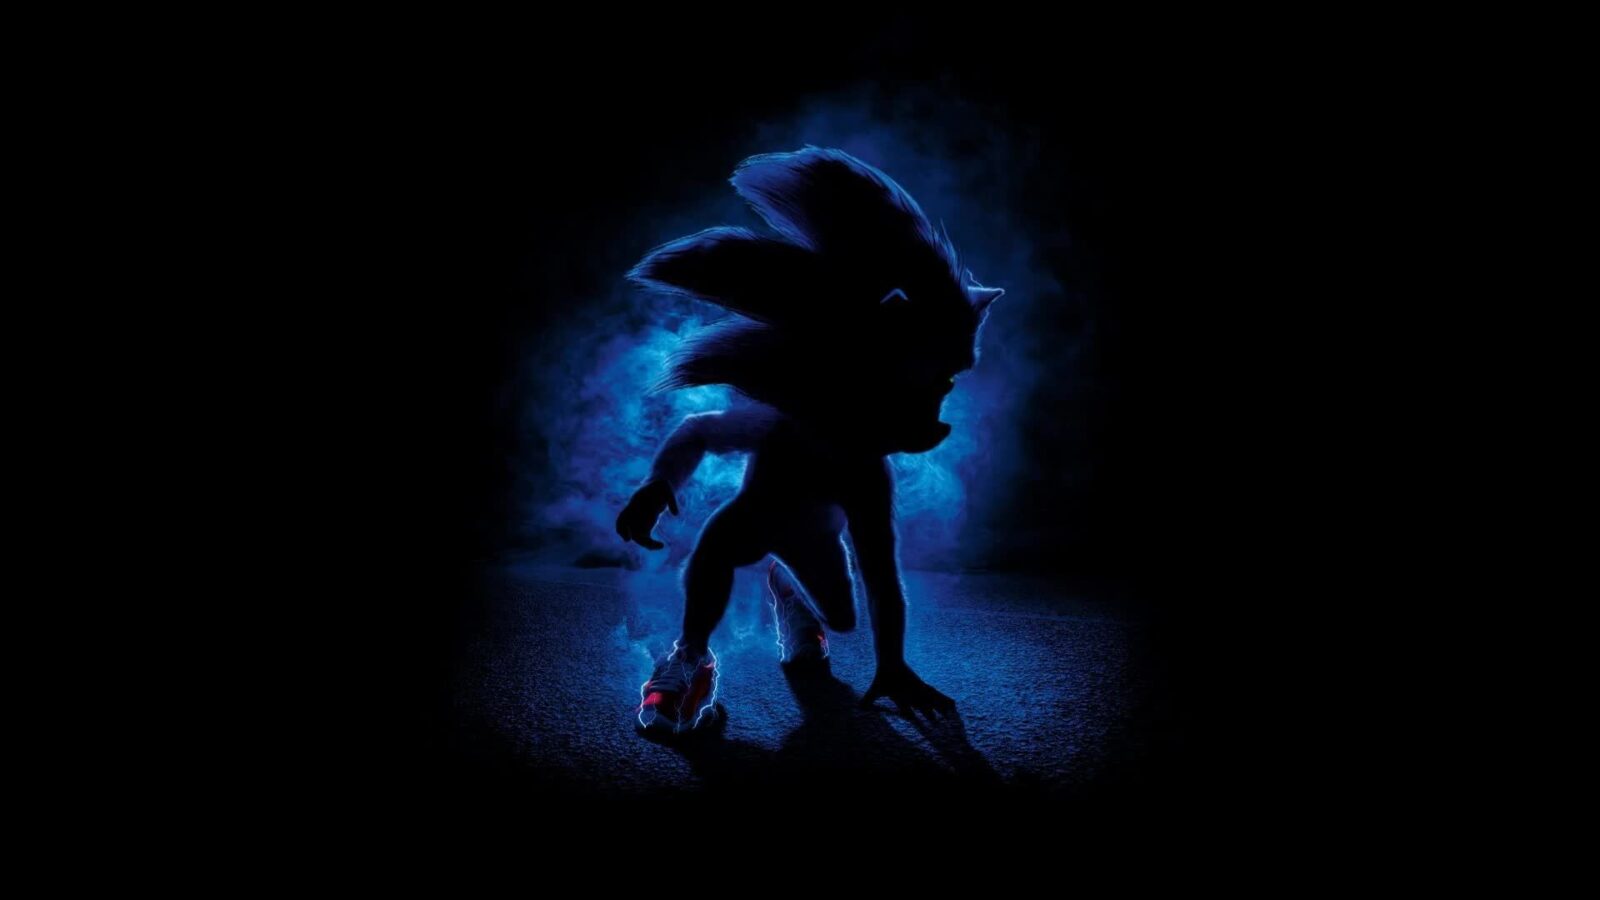 LiveWallpapers4Free.com | Sonic The Hedgehog Shadows - Free Animated Wallpaper